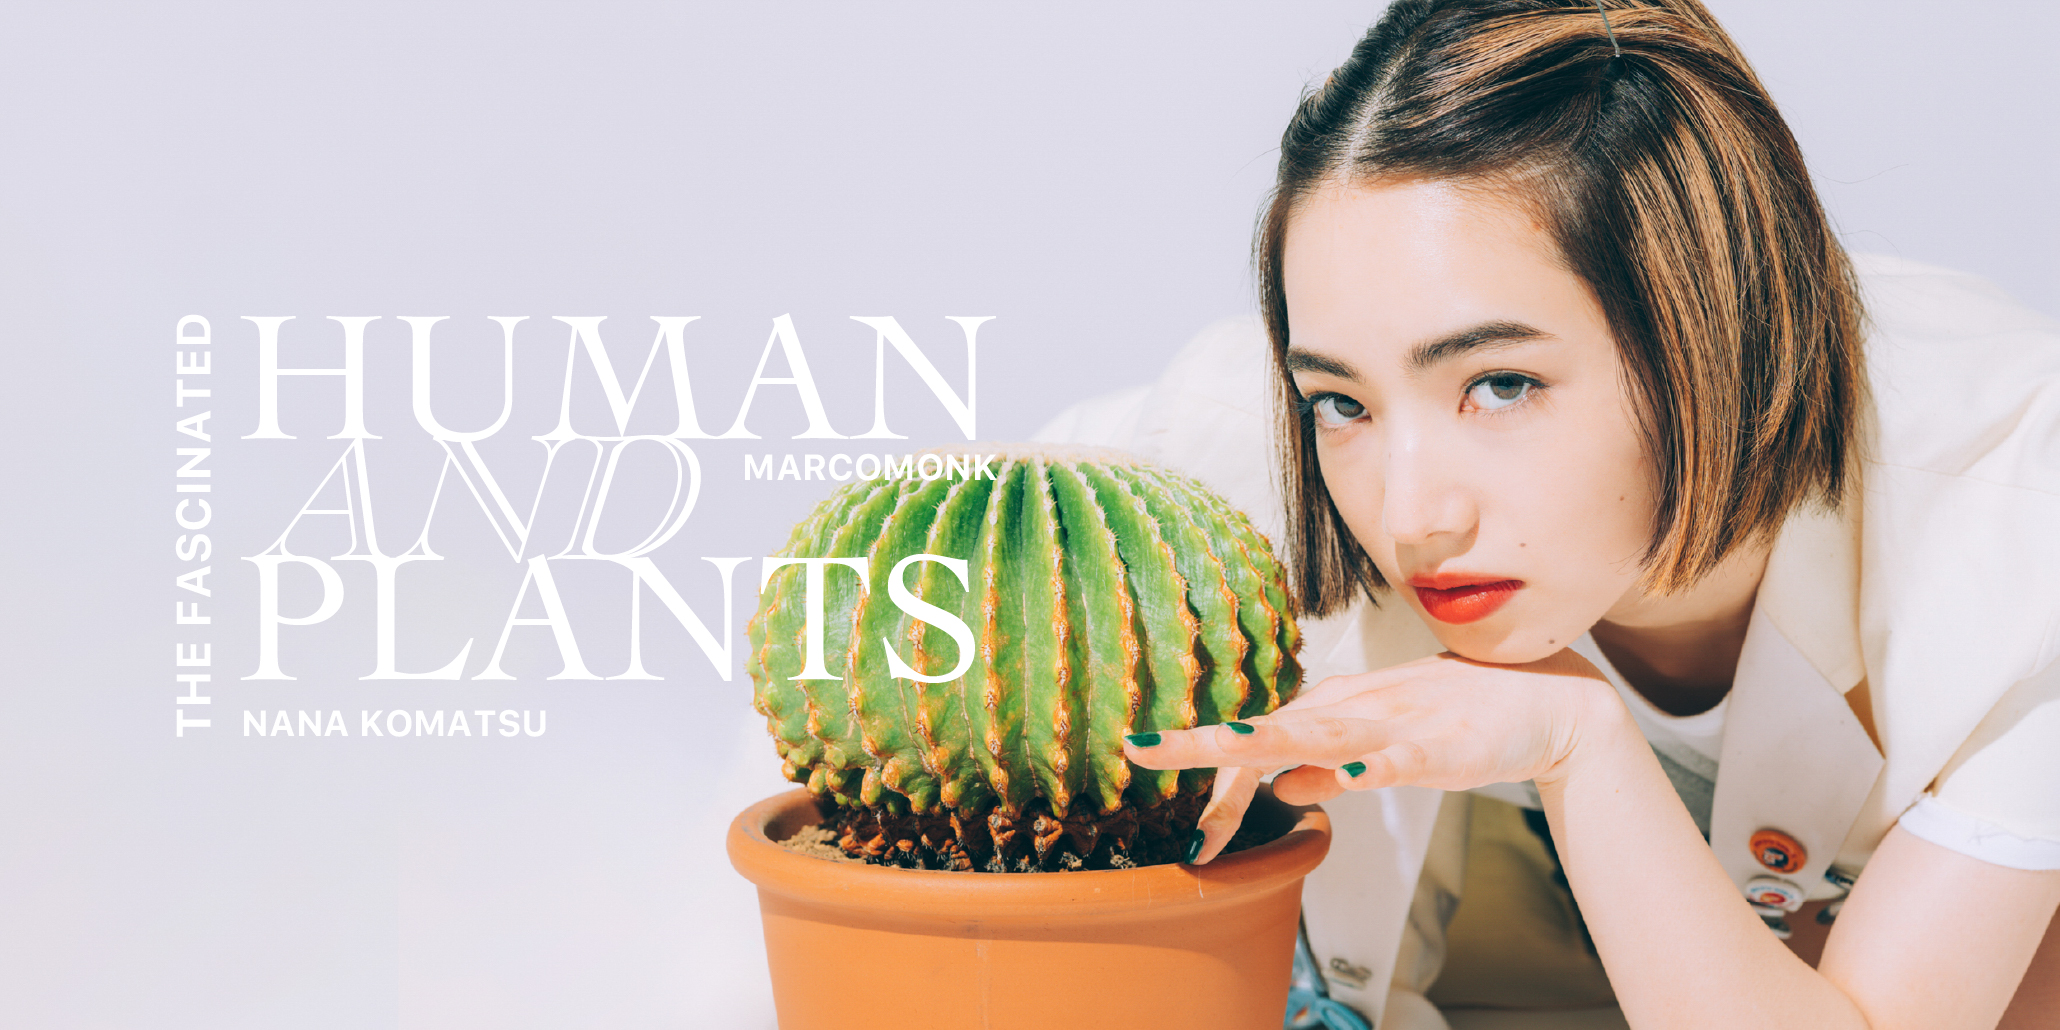 HUMAN AND PLANTS NANA KOMATSU